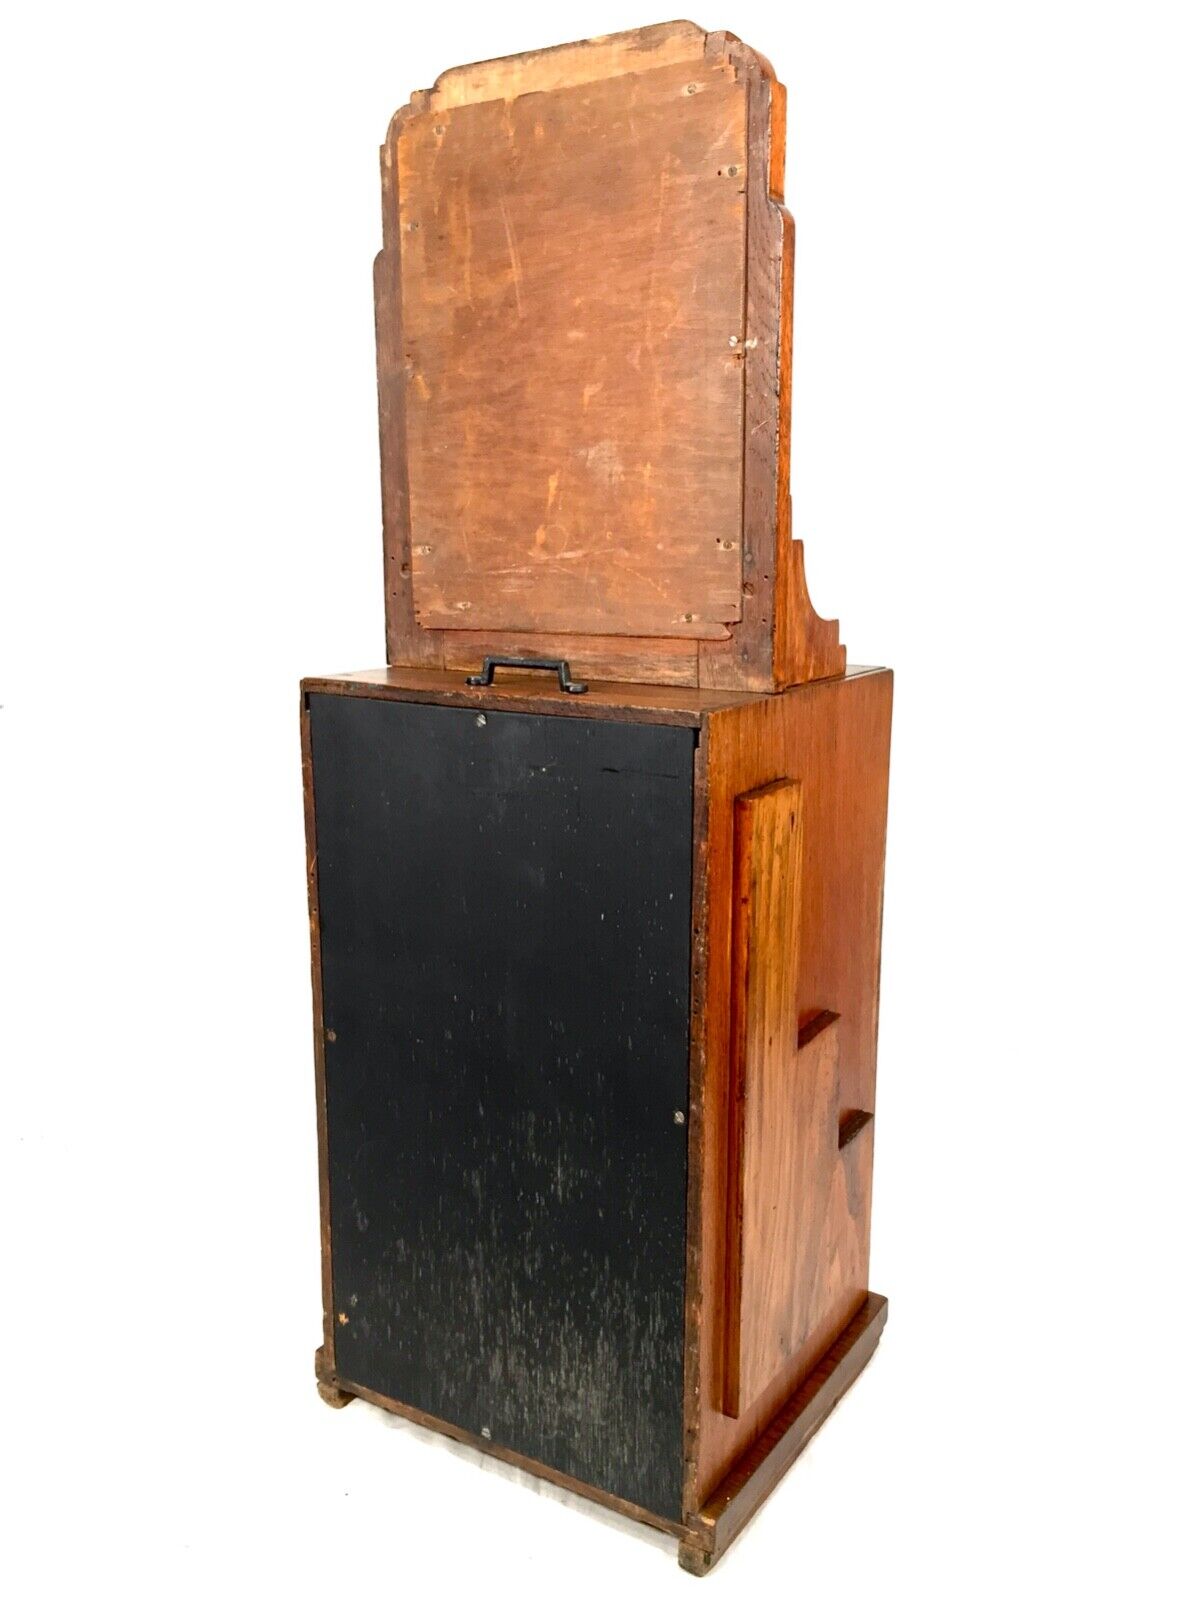 Antique Oak Wood Auto-Stereoscope Coin Operated Arcade Machine Peep Show c.1935